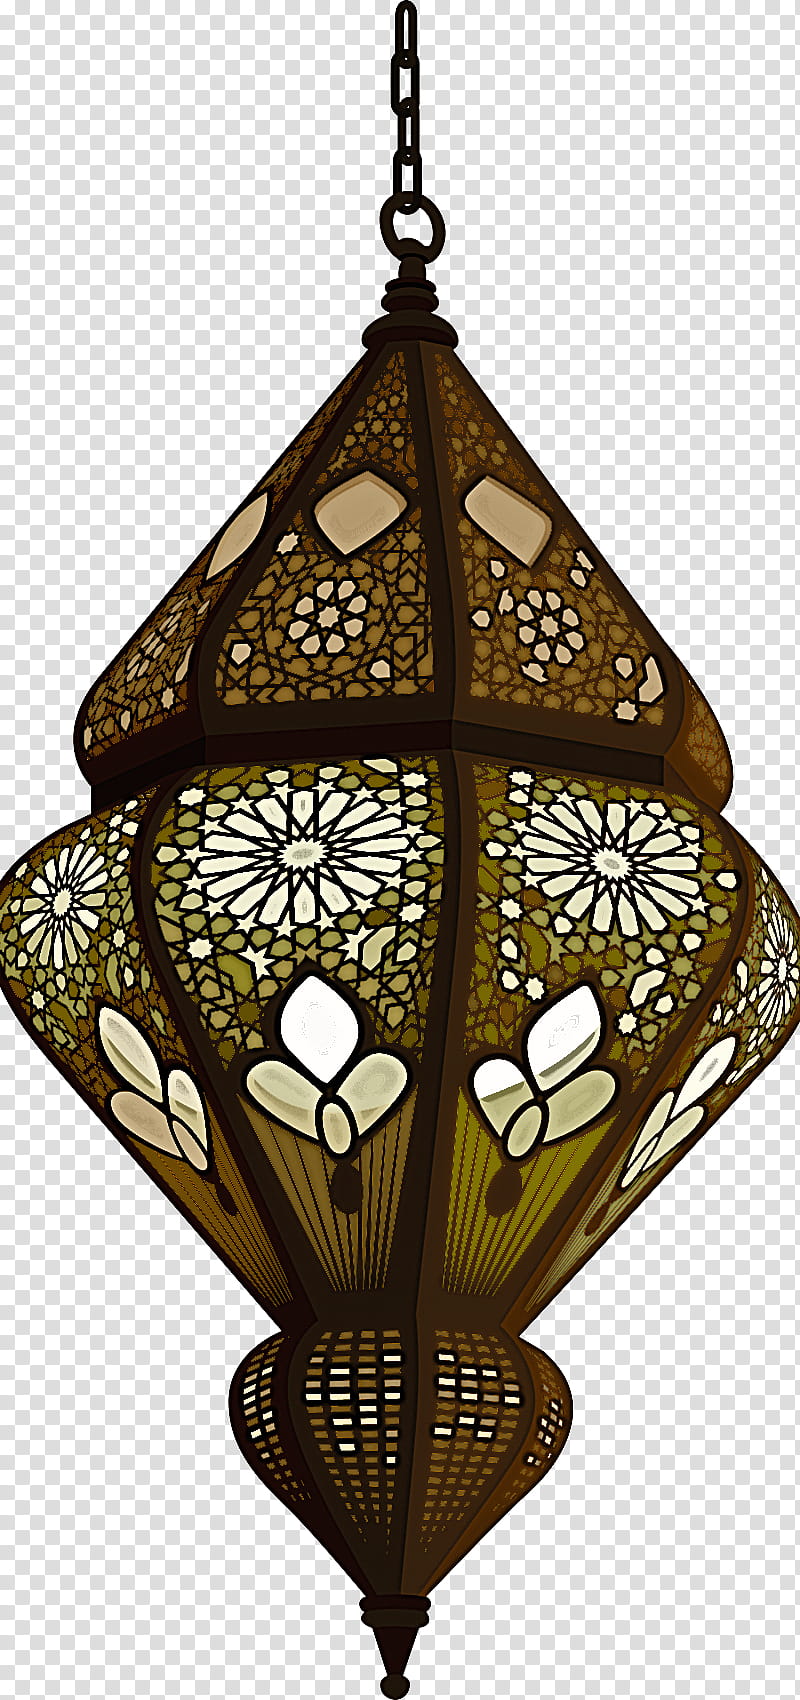 Eid al-Fitr, Lantern, Eid Alfitr, Lighting, Islamic Calligraphy, Diwali, Oil Lamp, Chandelier transparent background PNG clipart